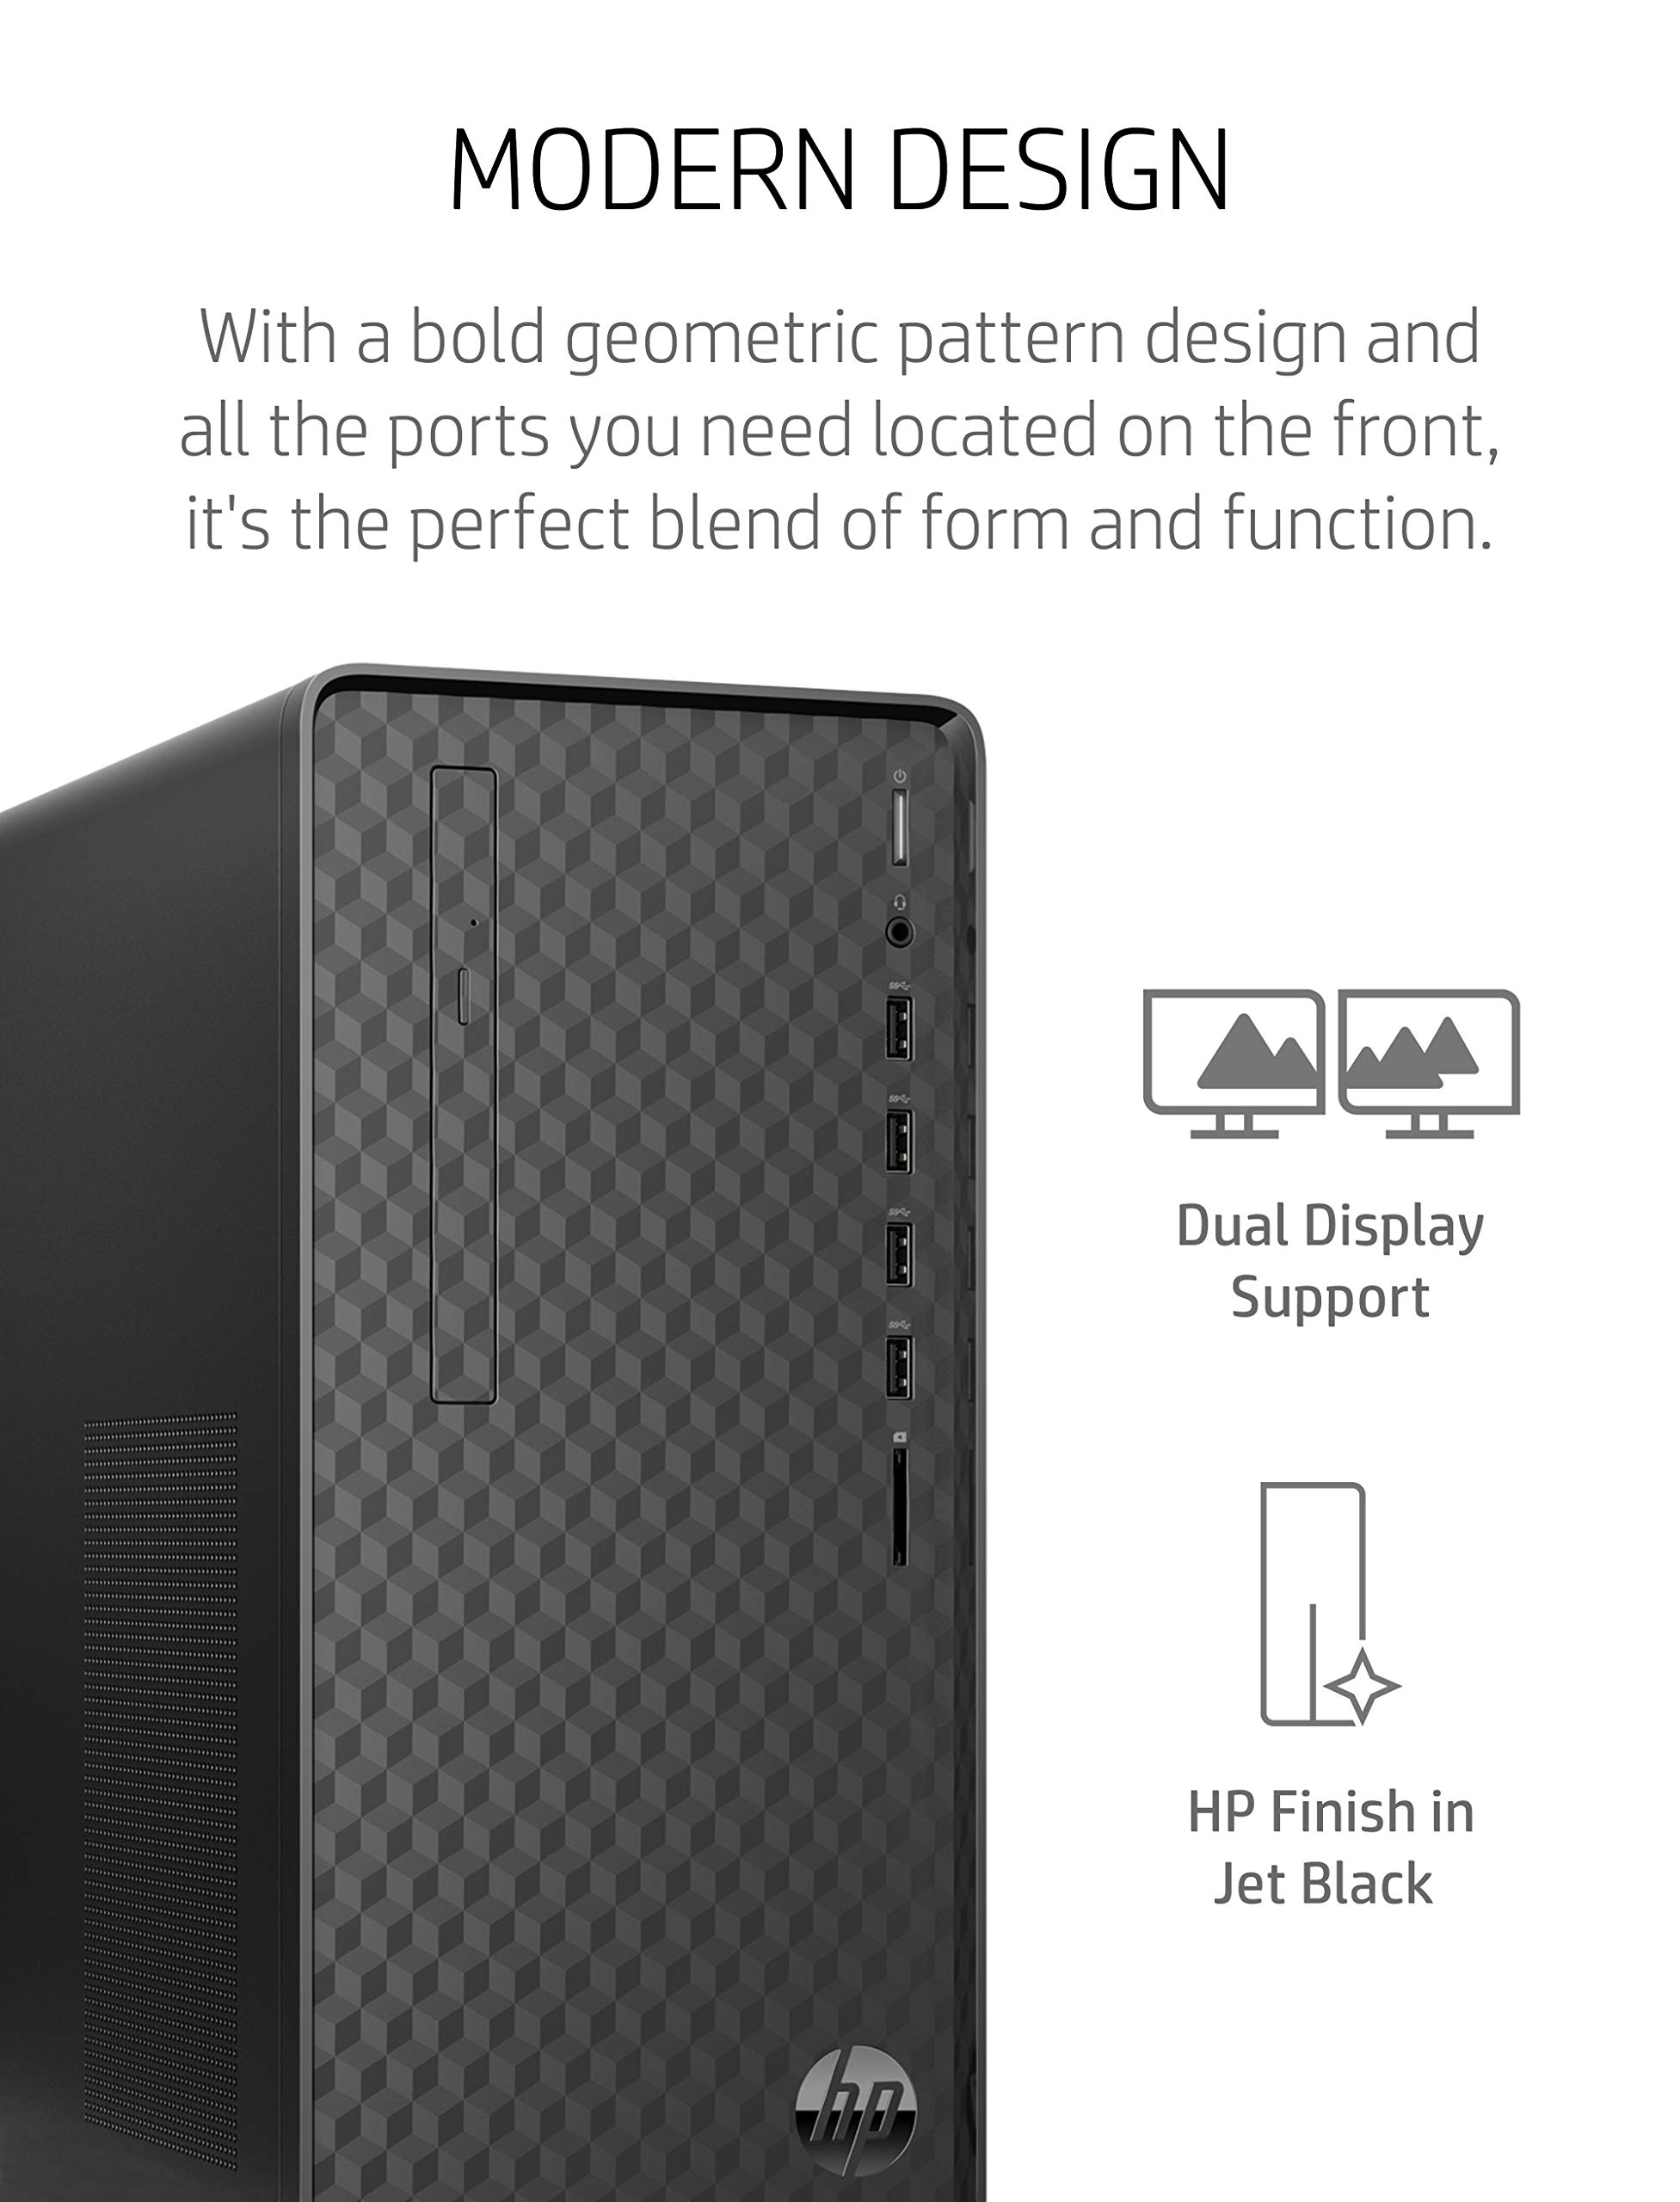 HP Newest Premium Desktop, AMD Ryzen 5 5600G Processor, 32 GB RAM, 1 TB SSD Storage, Windows 11 Pro, High Speed Performance, Computer, 8 USB Ports, for Business, Study, Videos, and Gaming